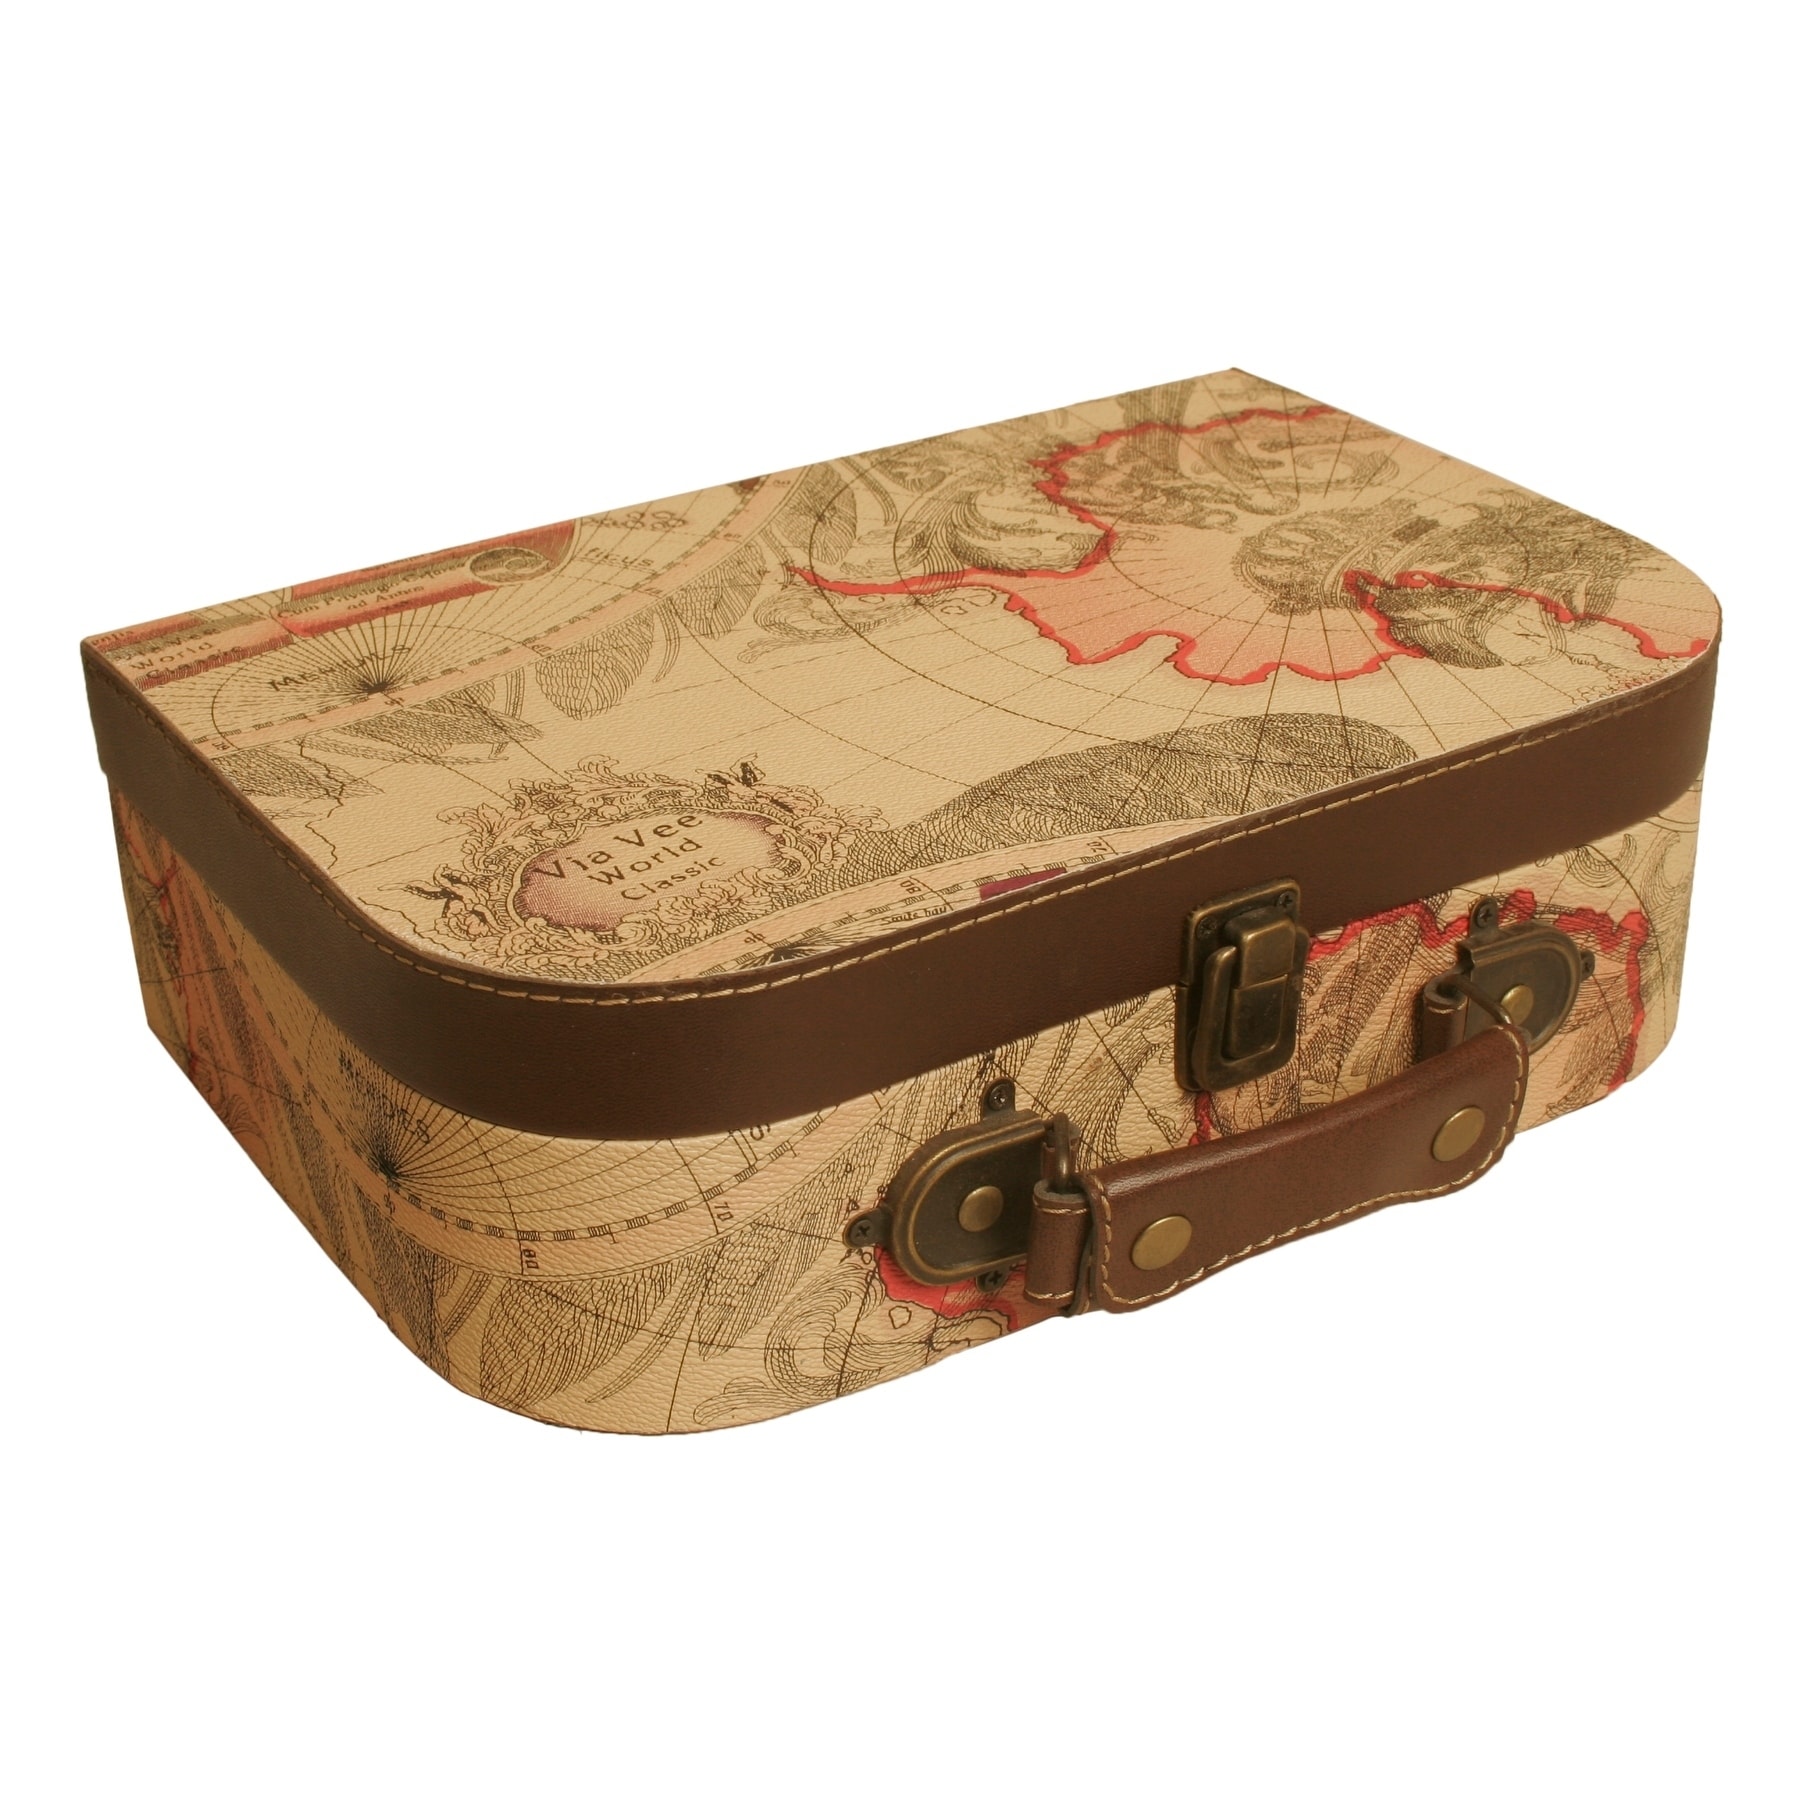 Classic Travel Suitcase set  Travel suitcase bags, Suitcase set